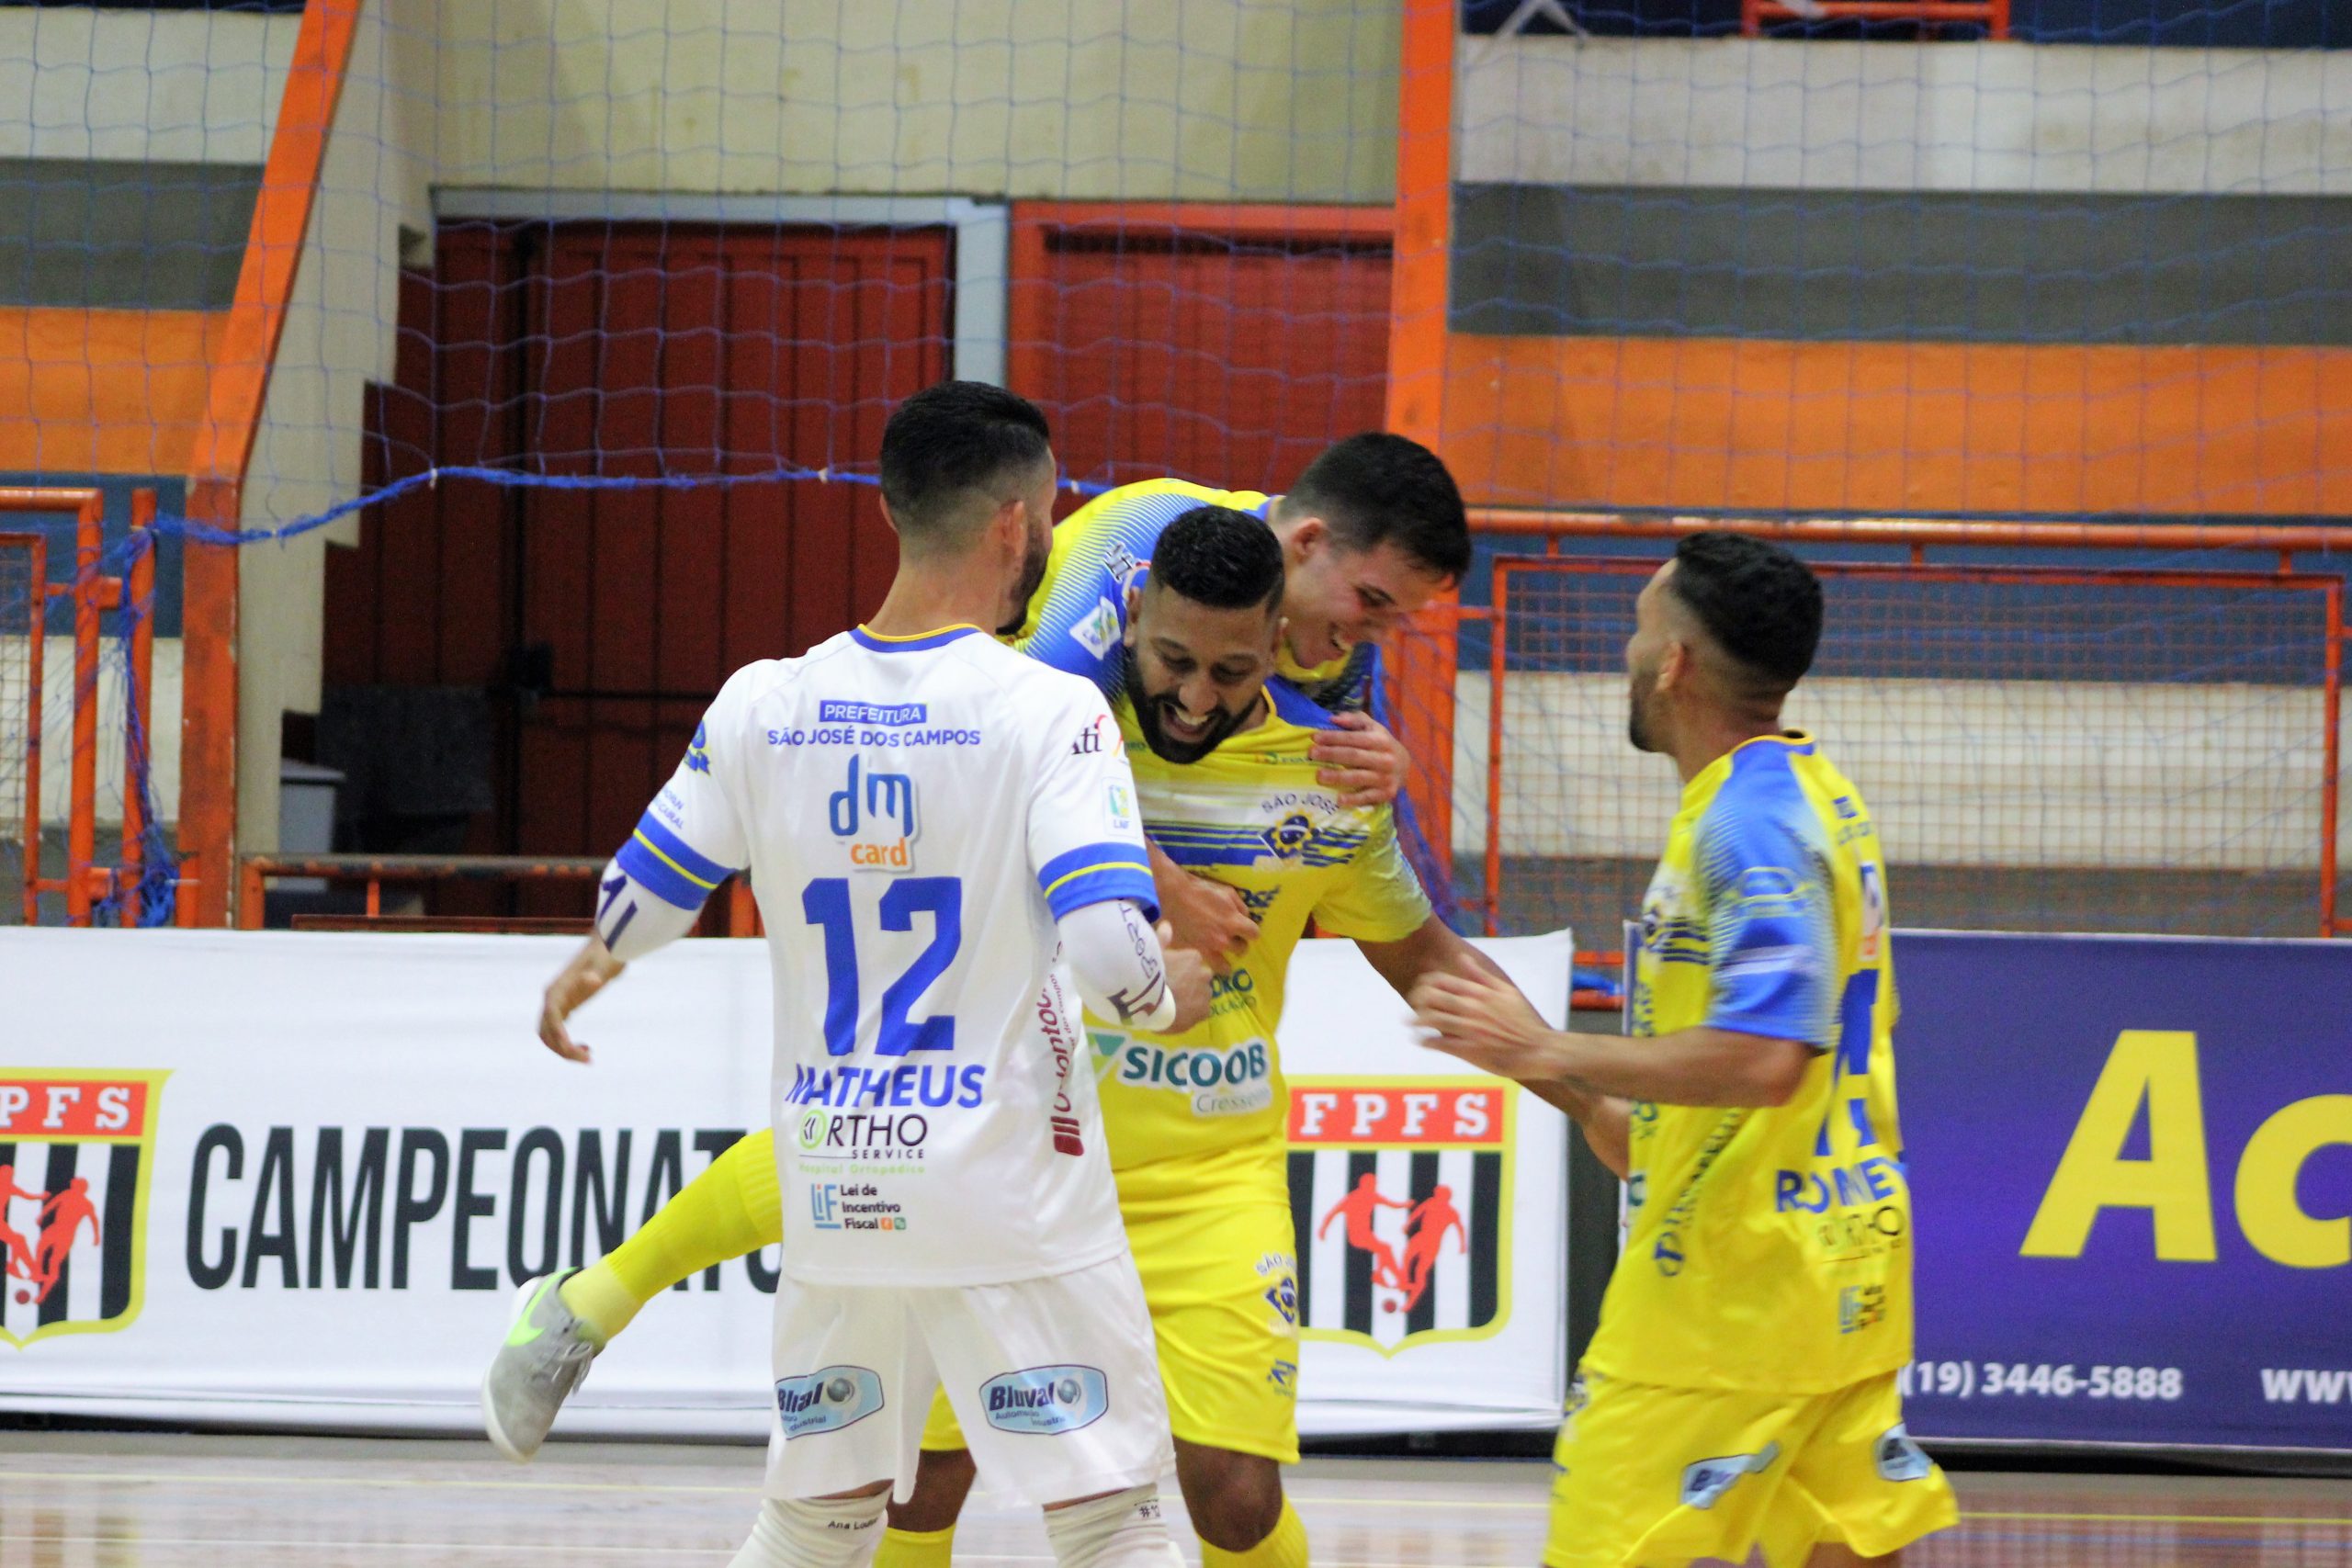 Brutos é eliminado do Campeonato Paulista de Futsal